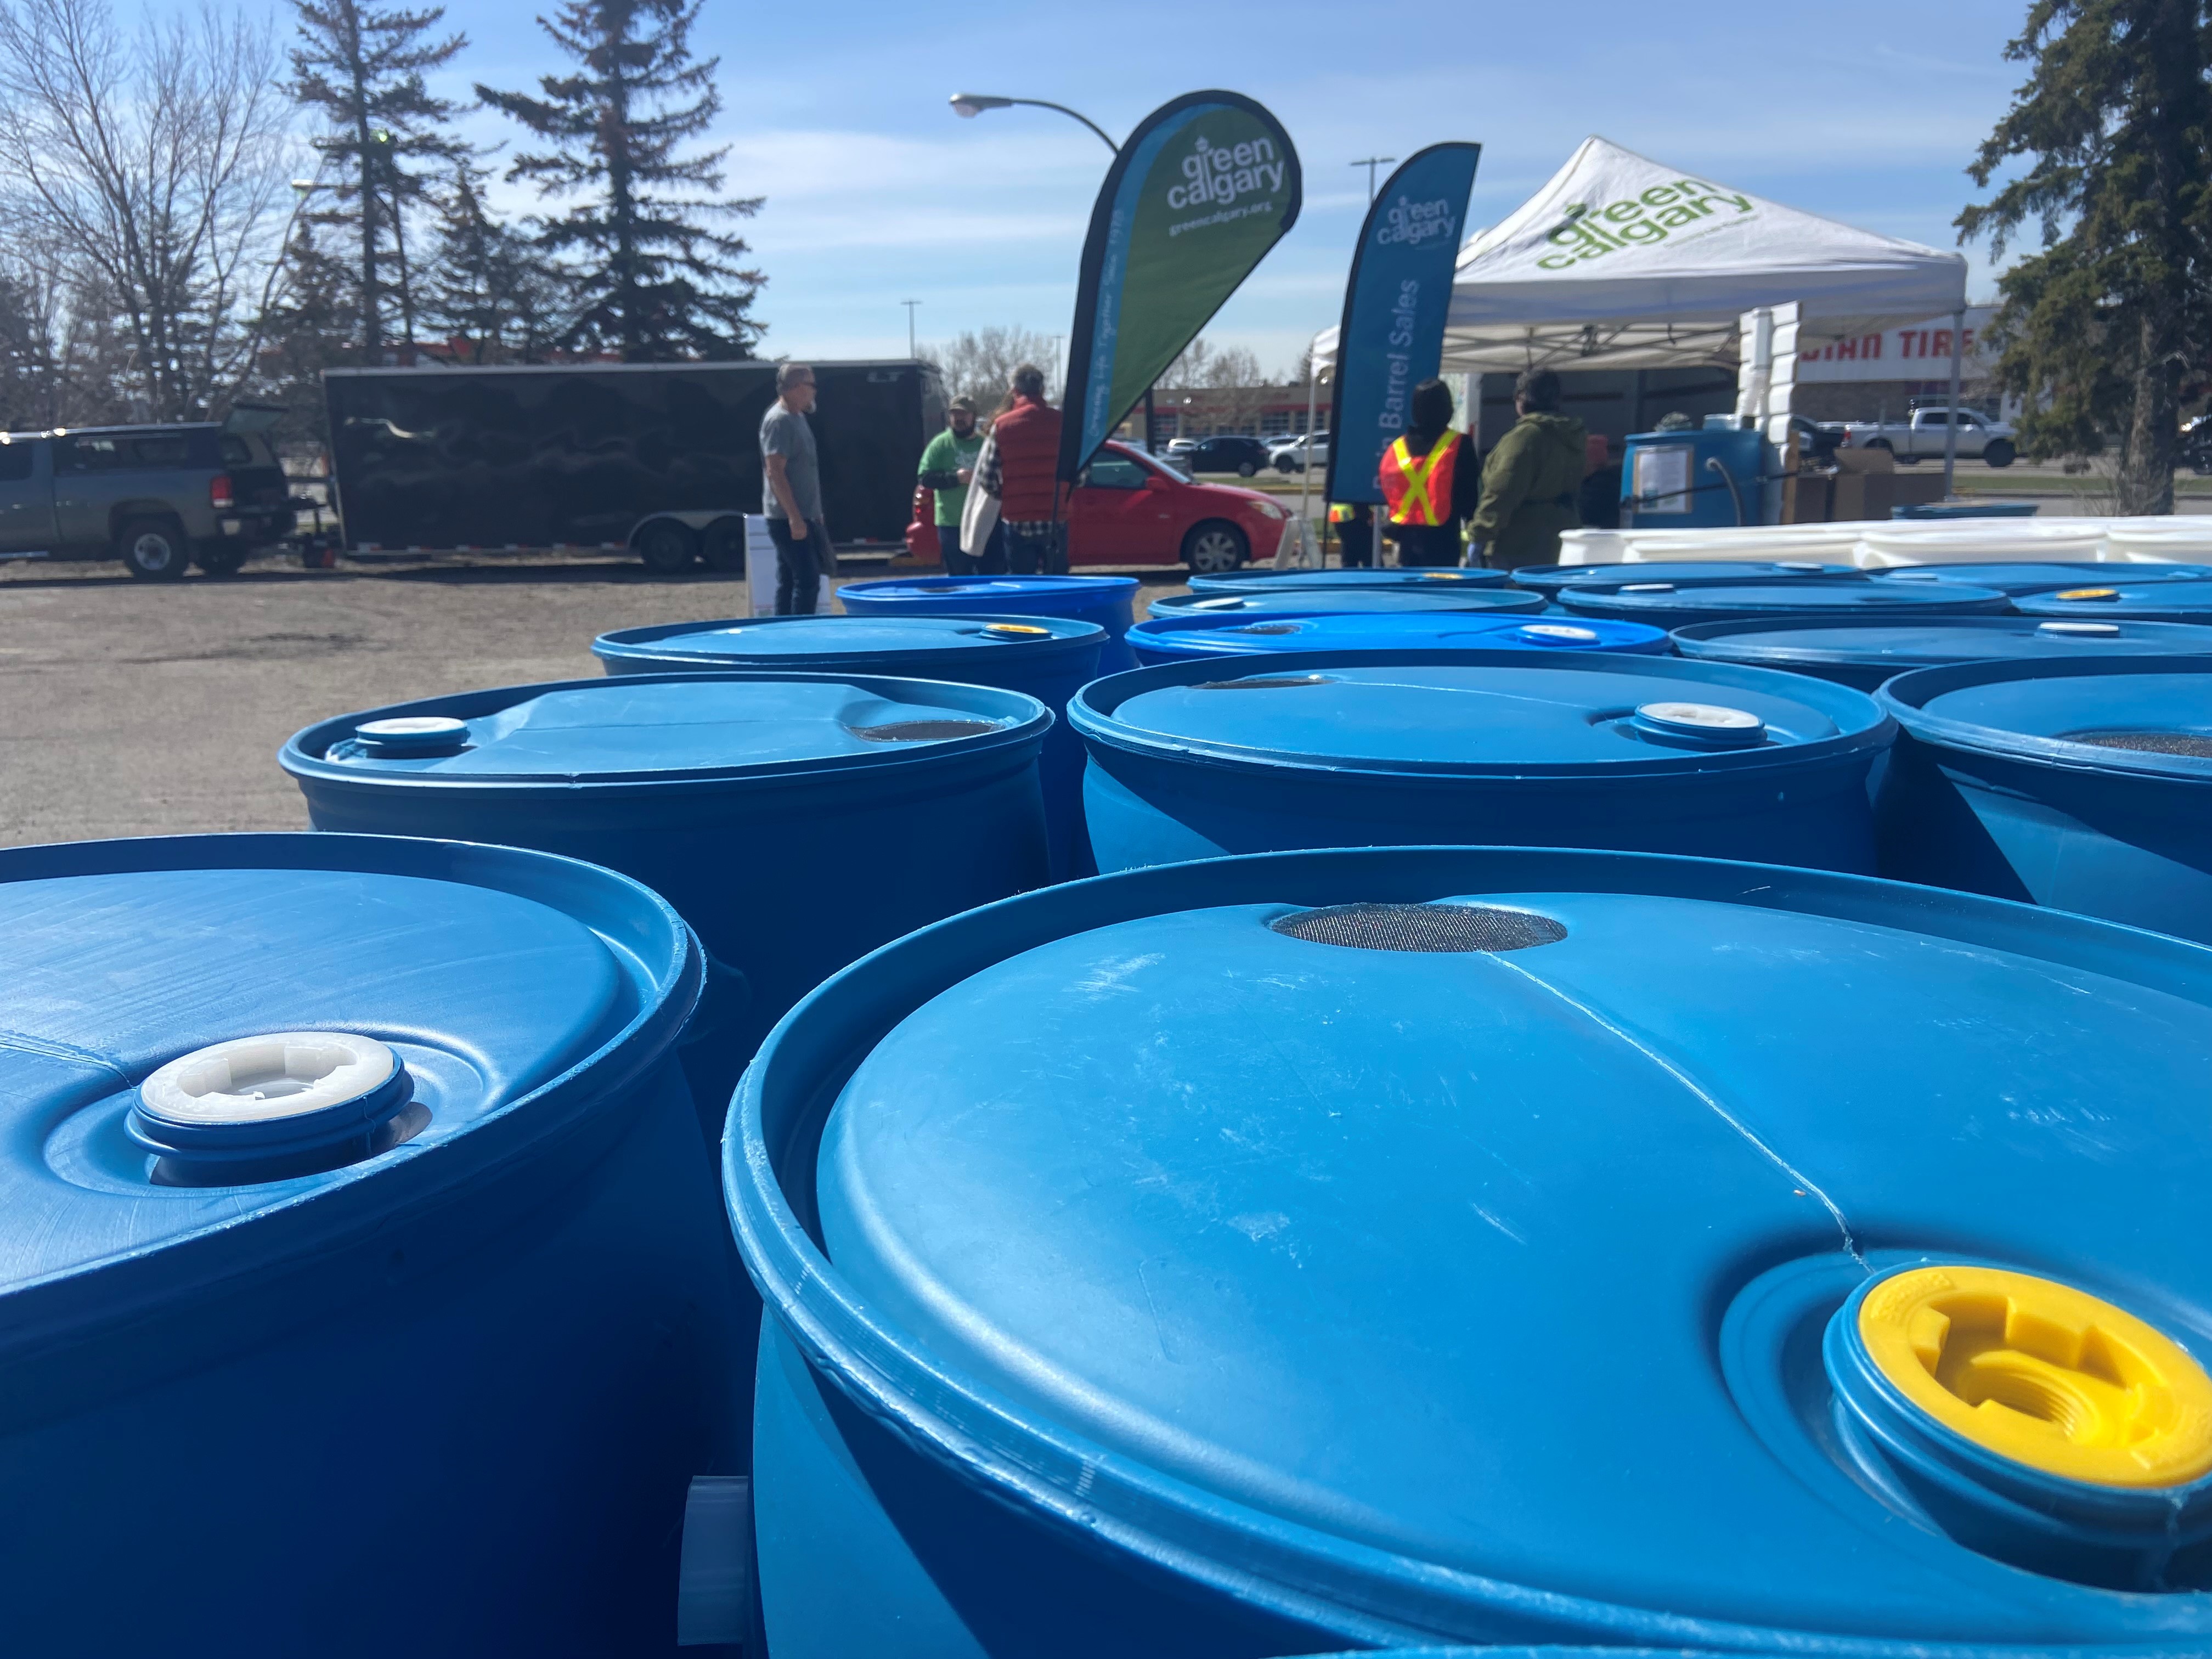 ‘Unprecedented’ demand for rain barrels in Calgary leads to
shortage